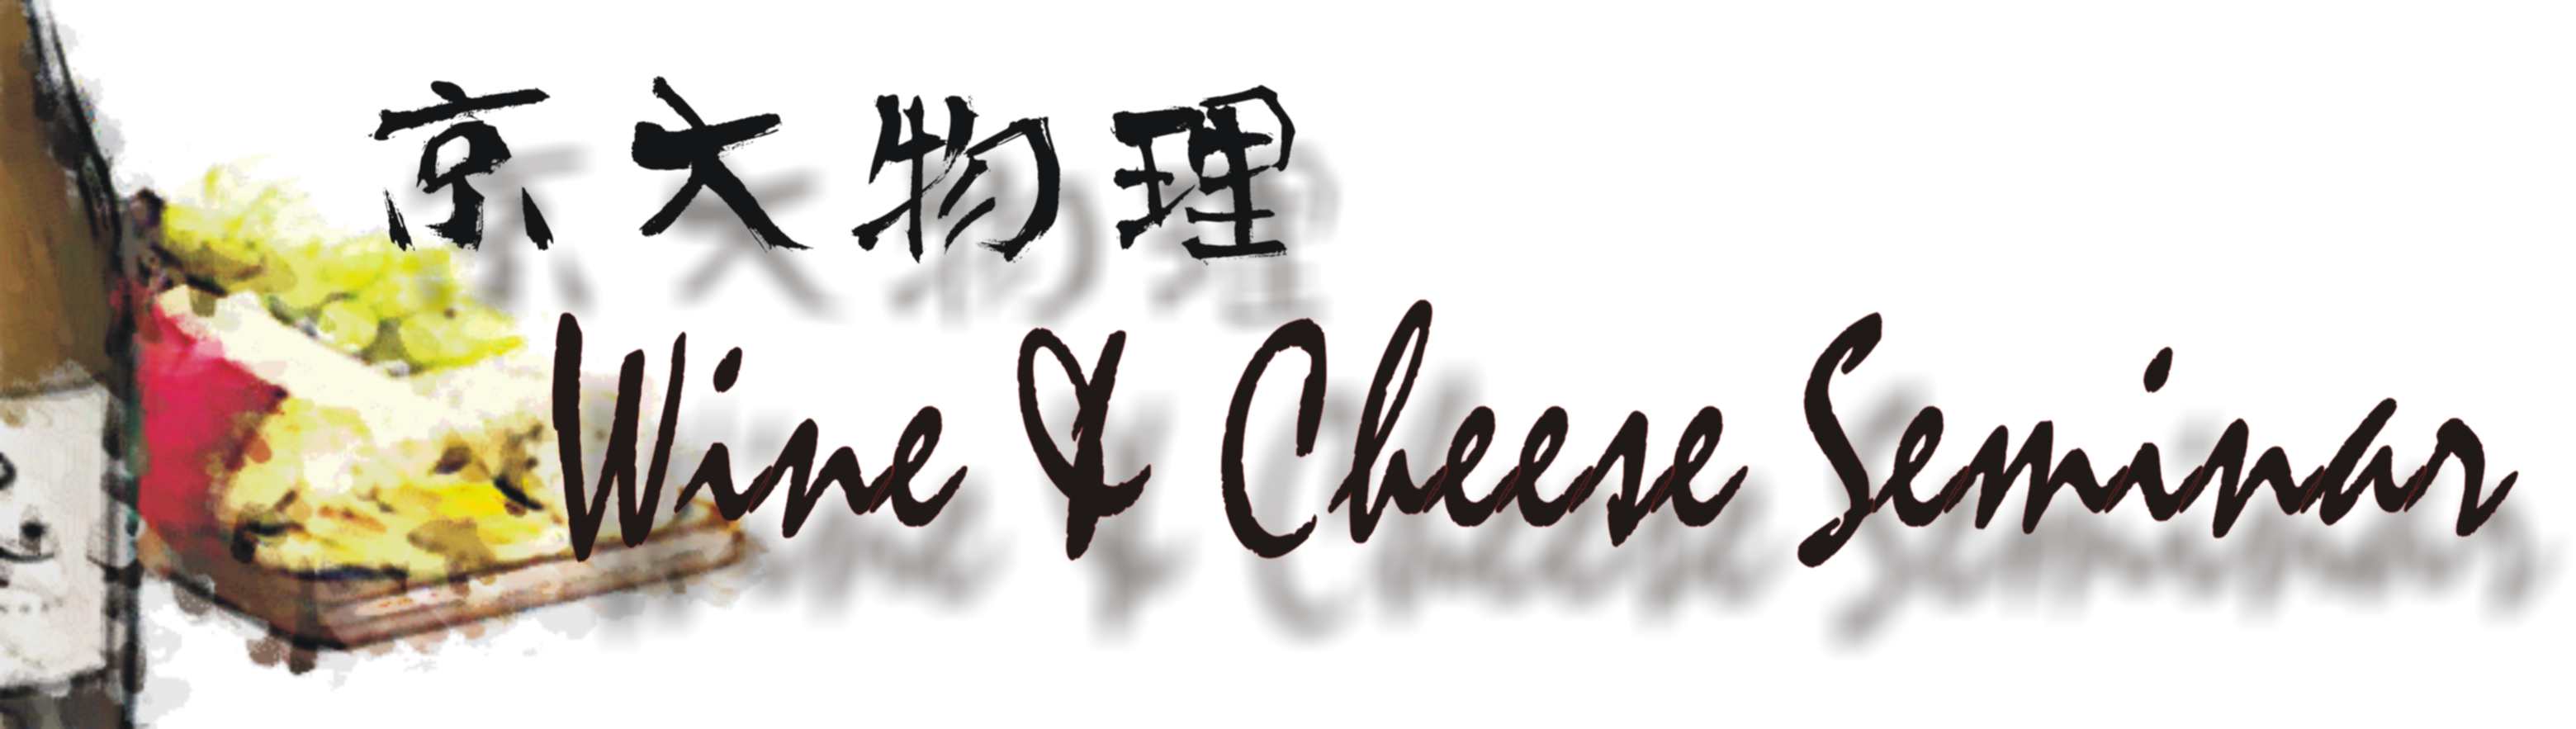 wine and cheese seminar